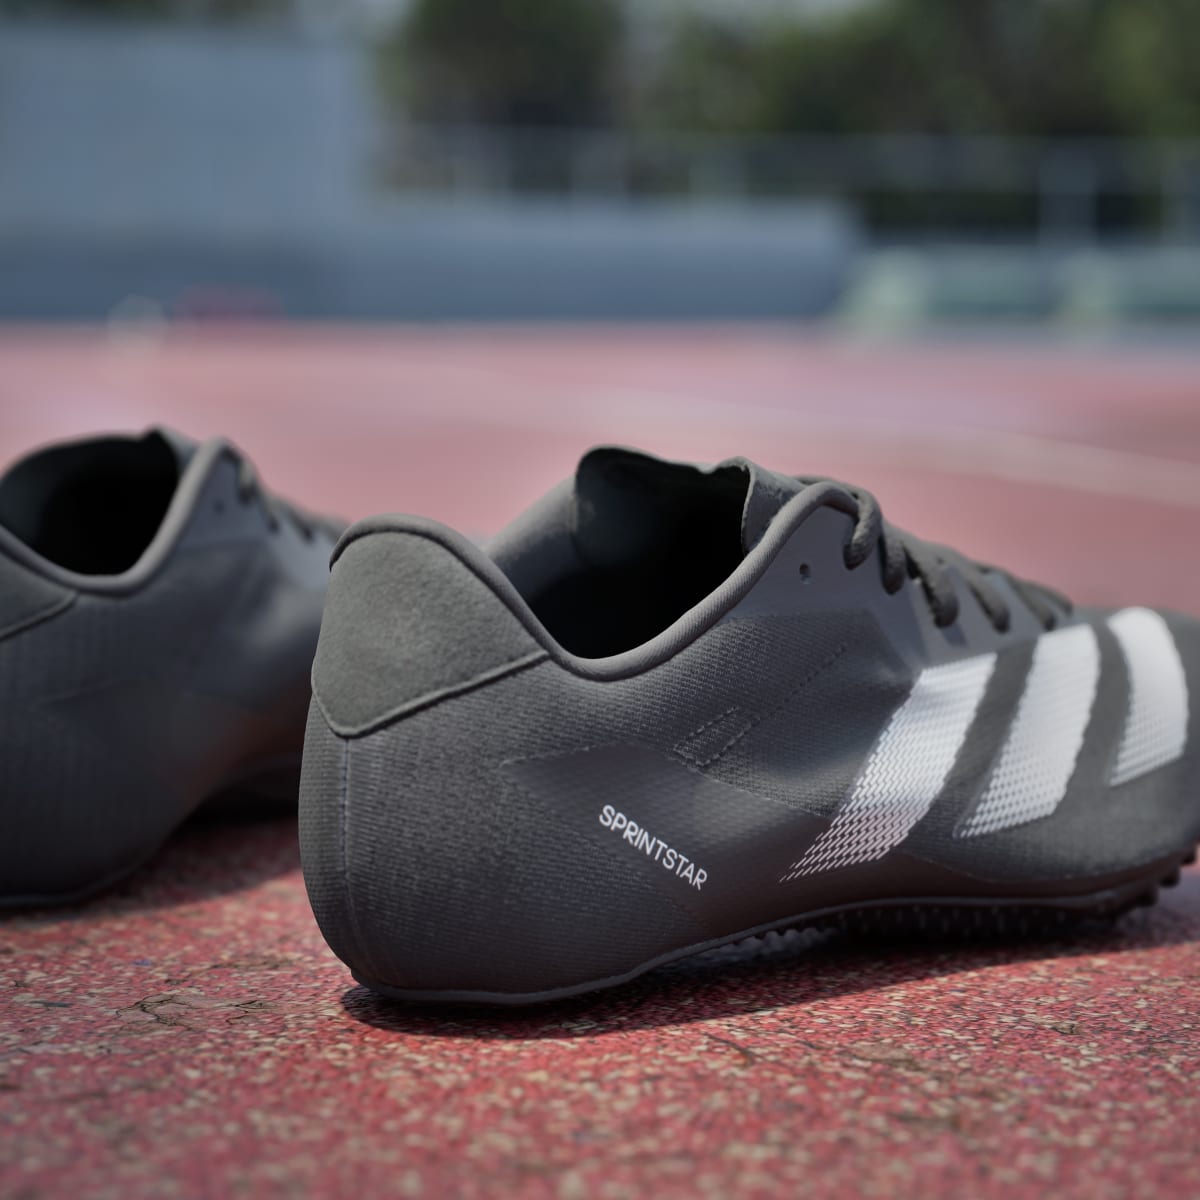 Adidas Adizero Sprintstar Shoes. 9